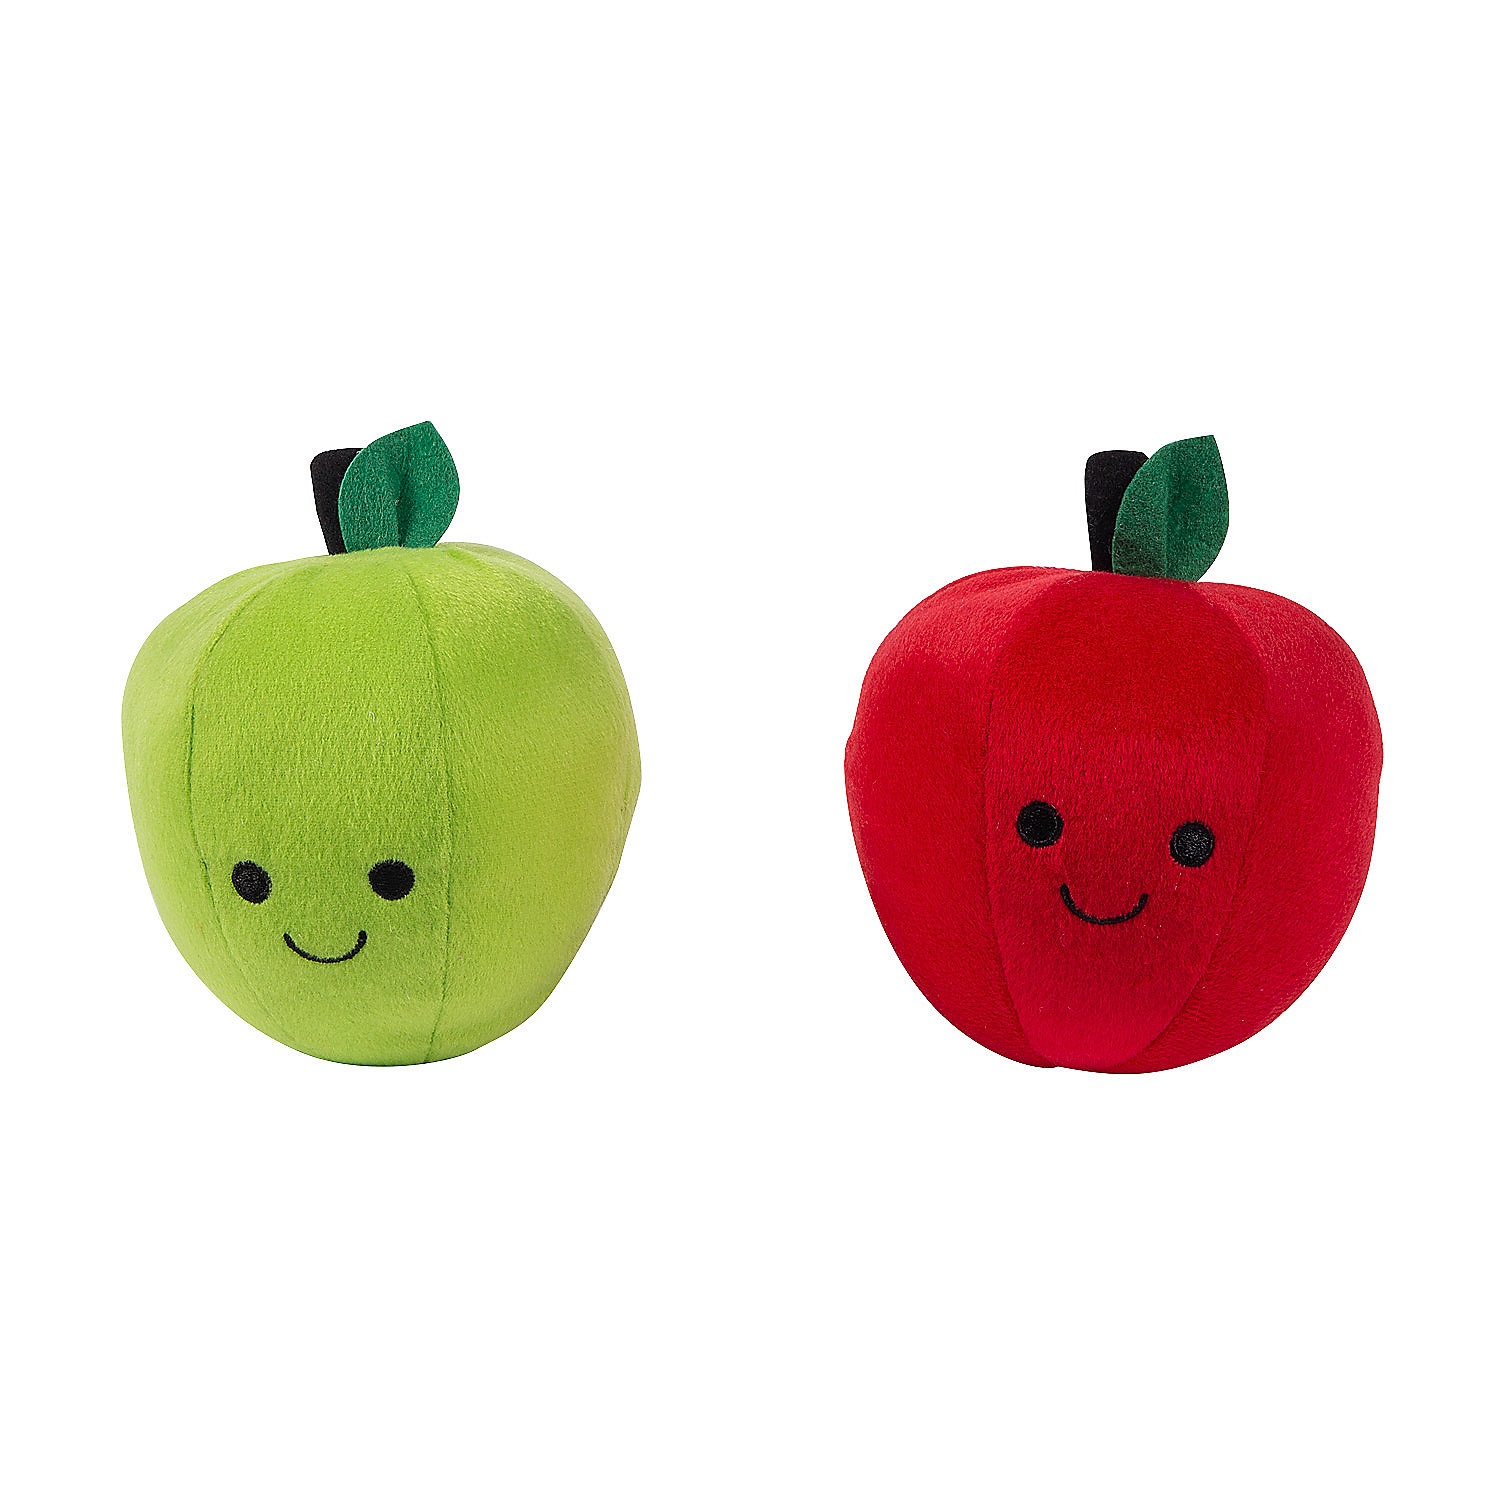 smiling-stuffed-apples-12-pc-_13980649